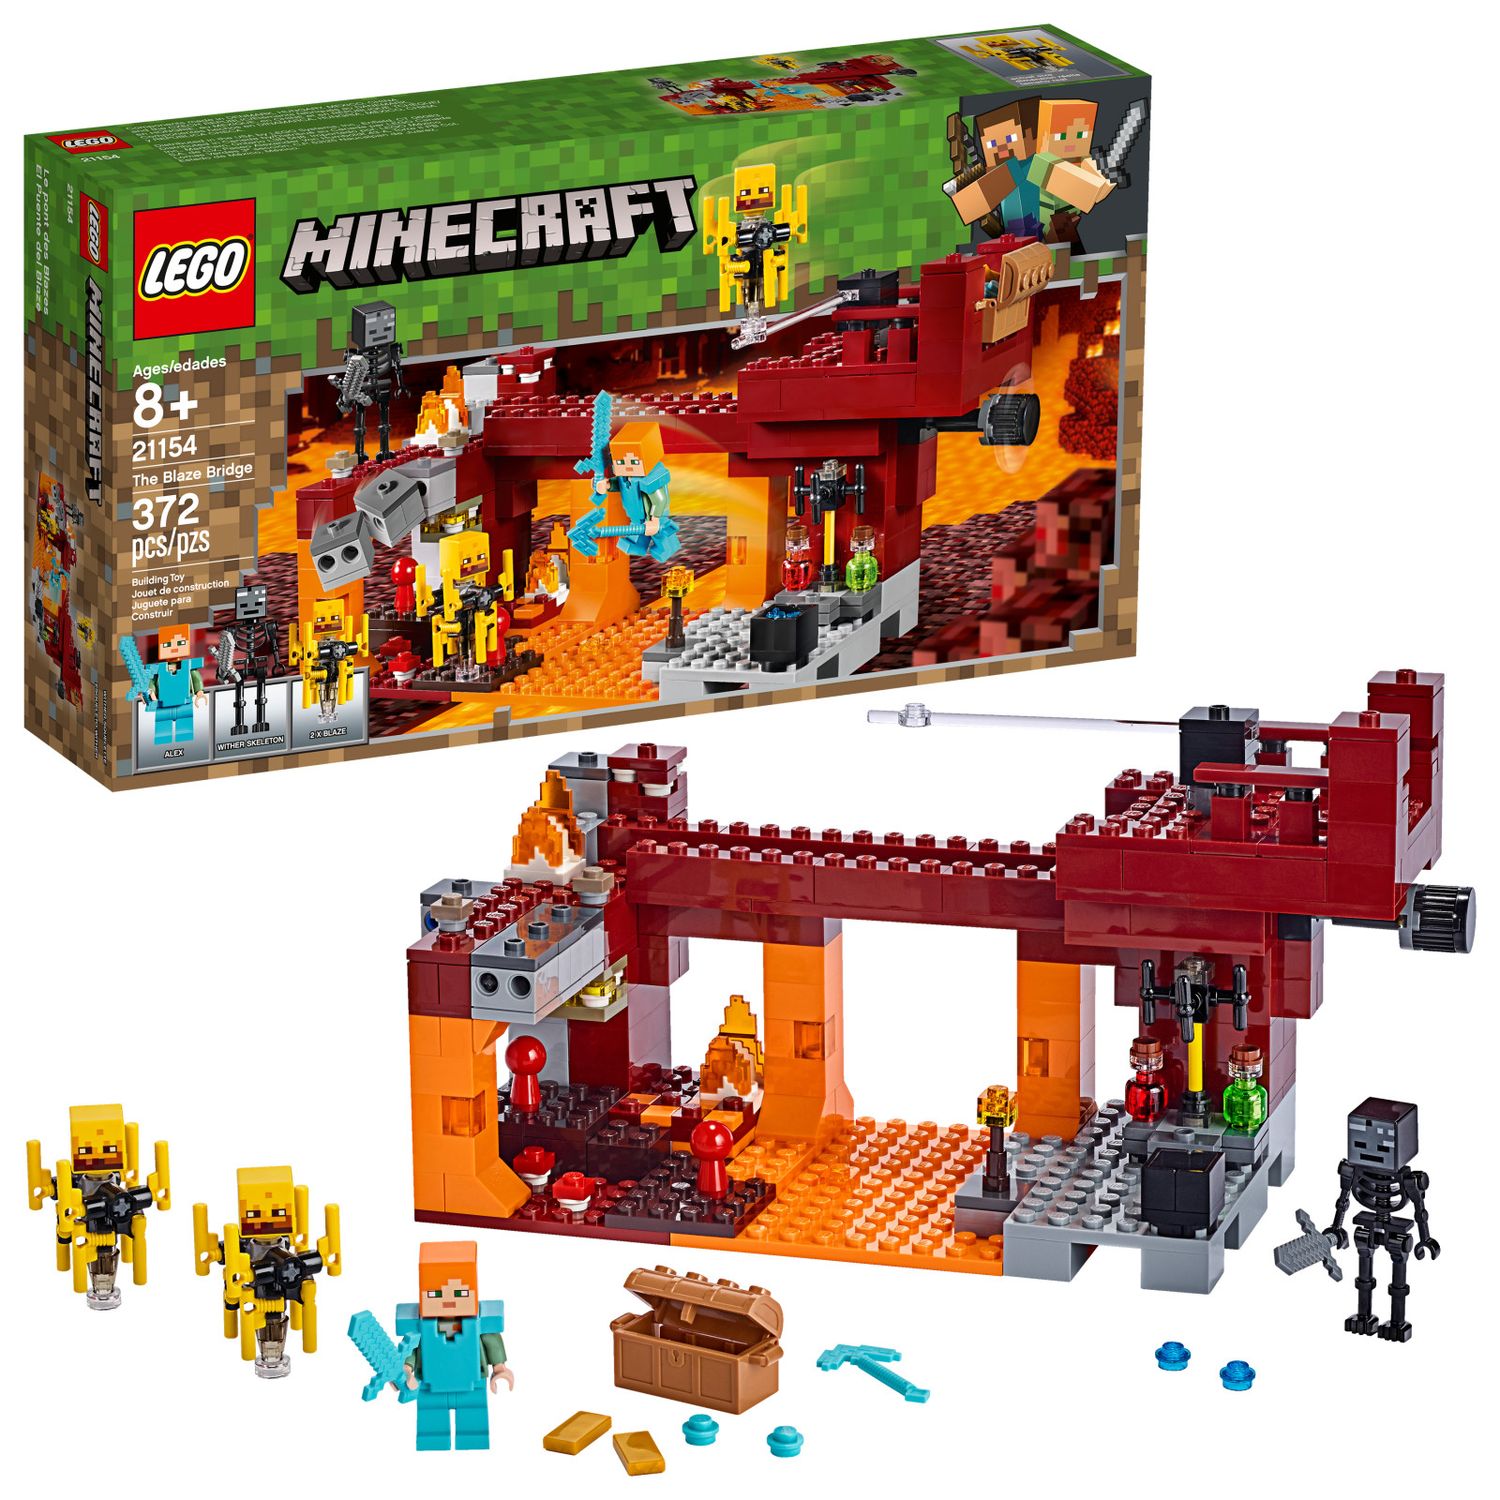 all lego minecraft sets